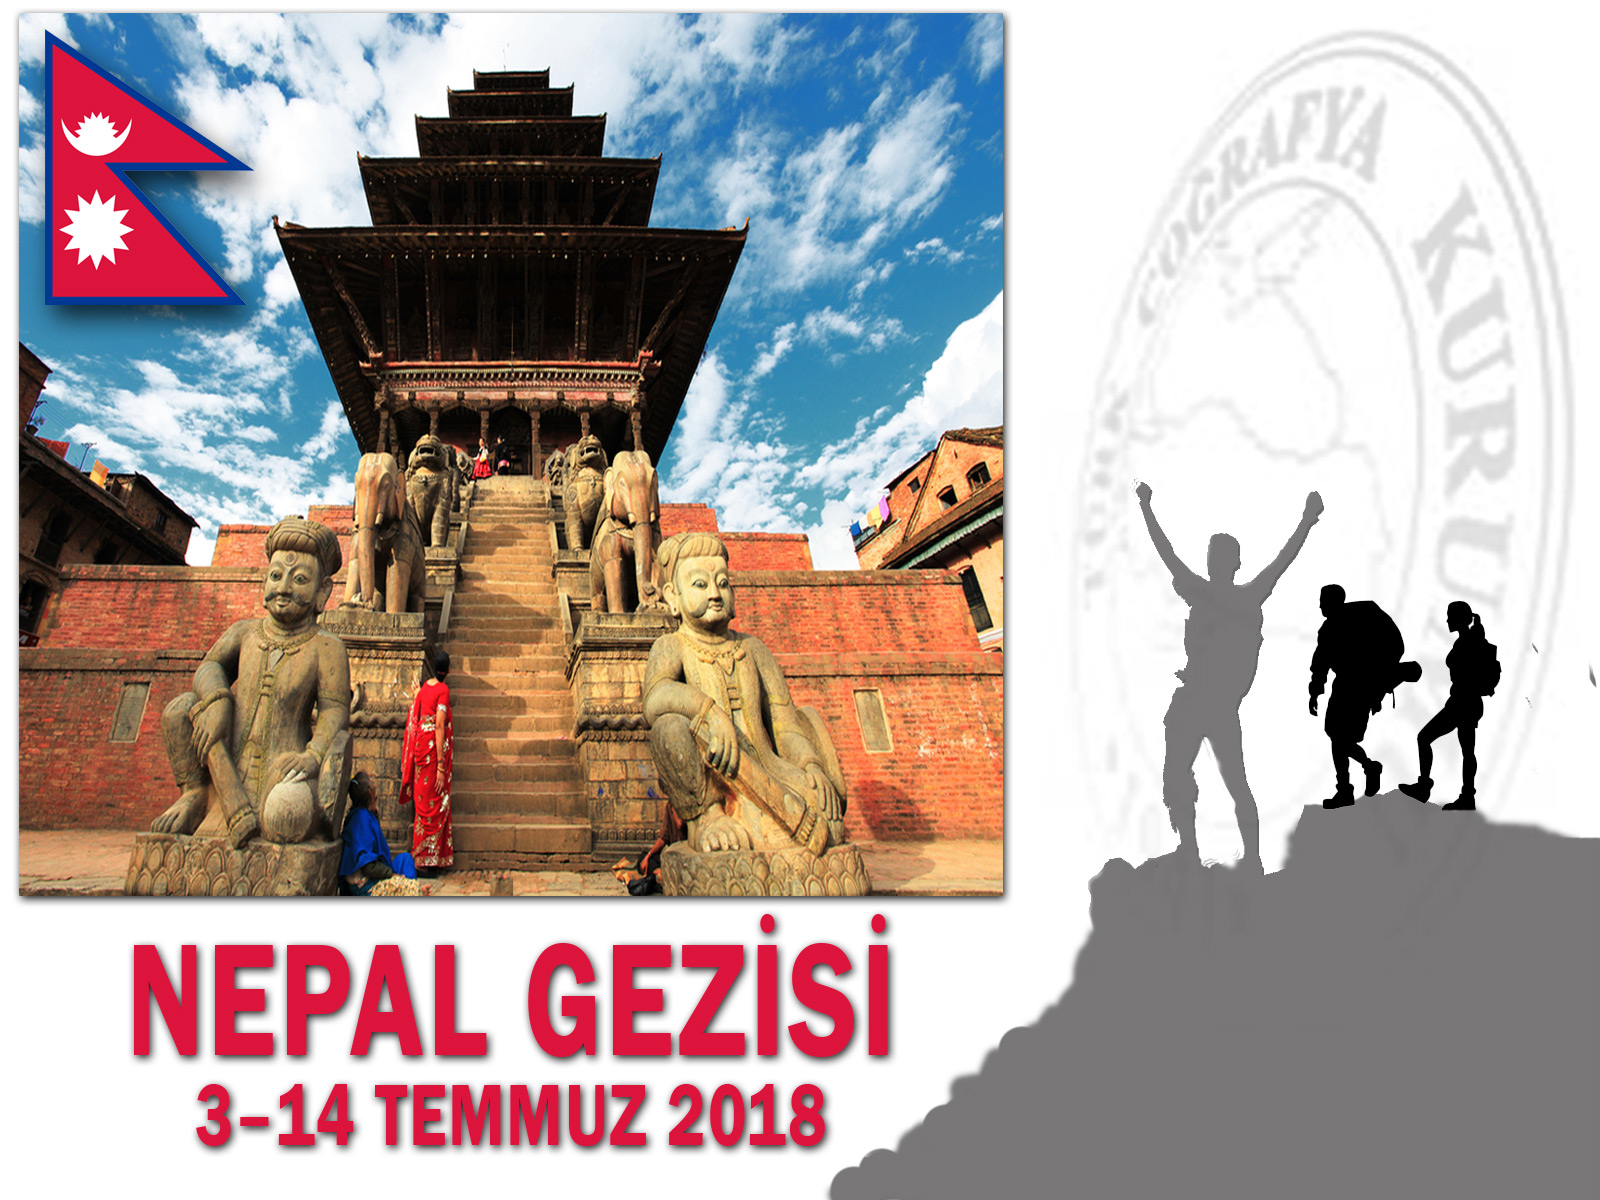 NEPAL GEZİSİ 3 - 14 TEMMUZ 2018